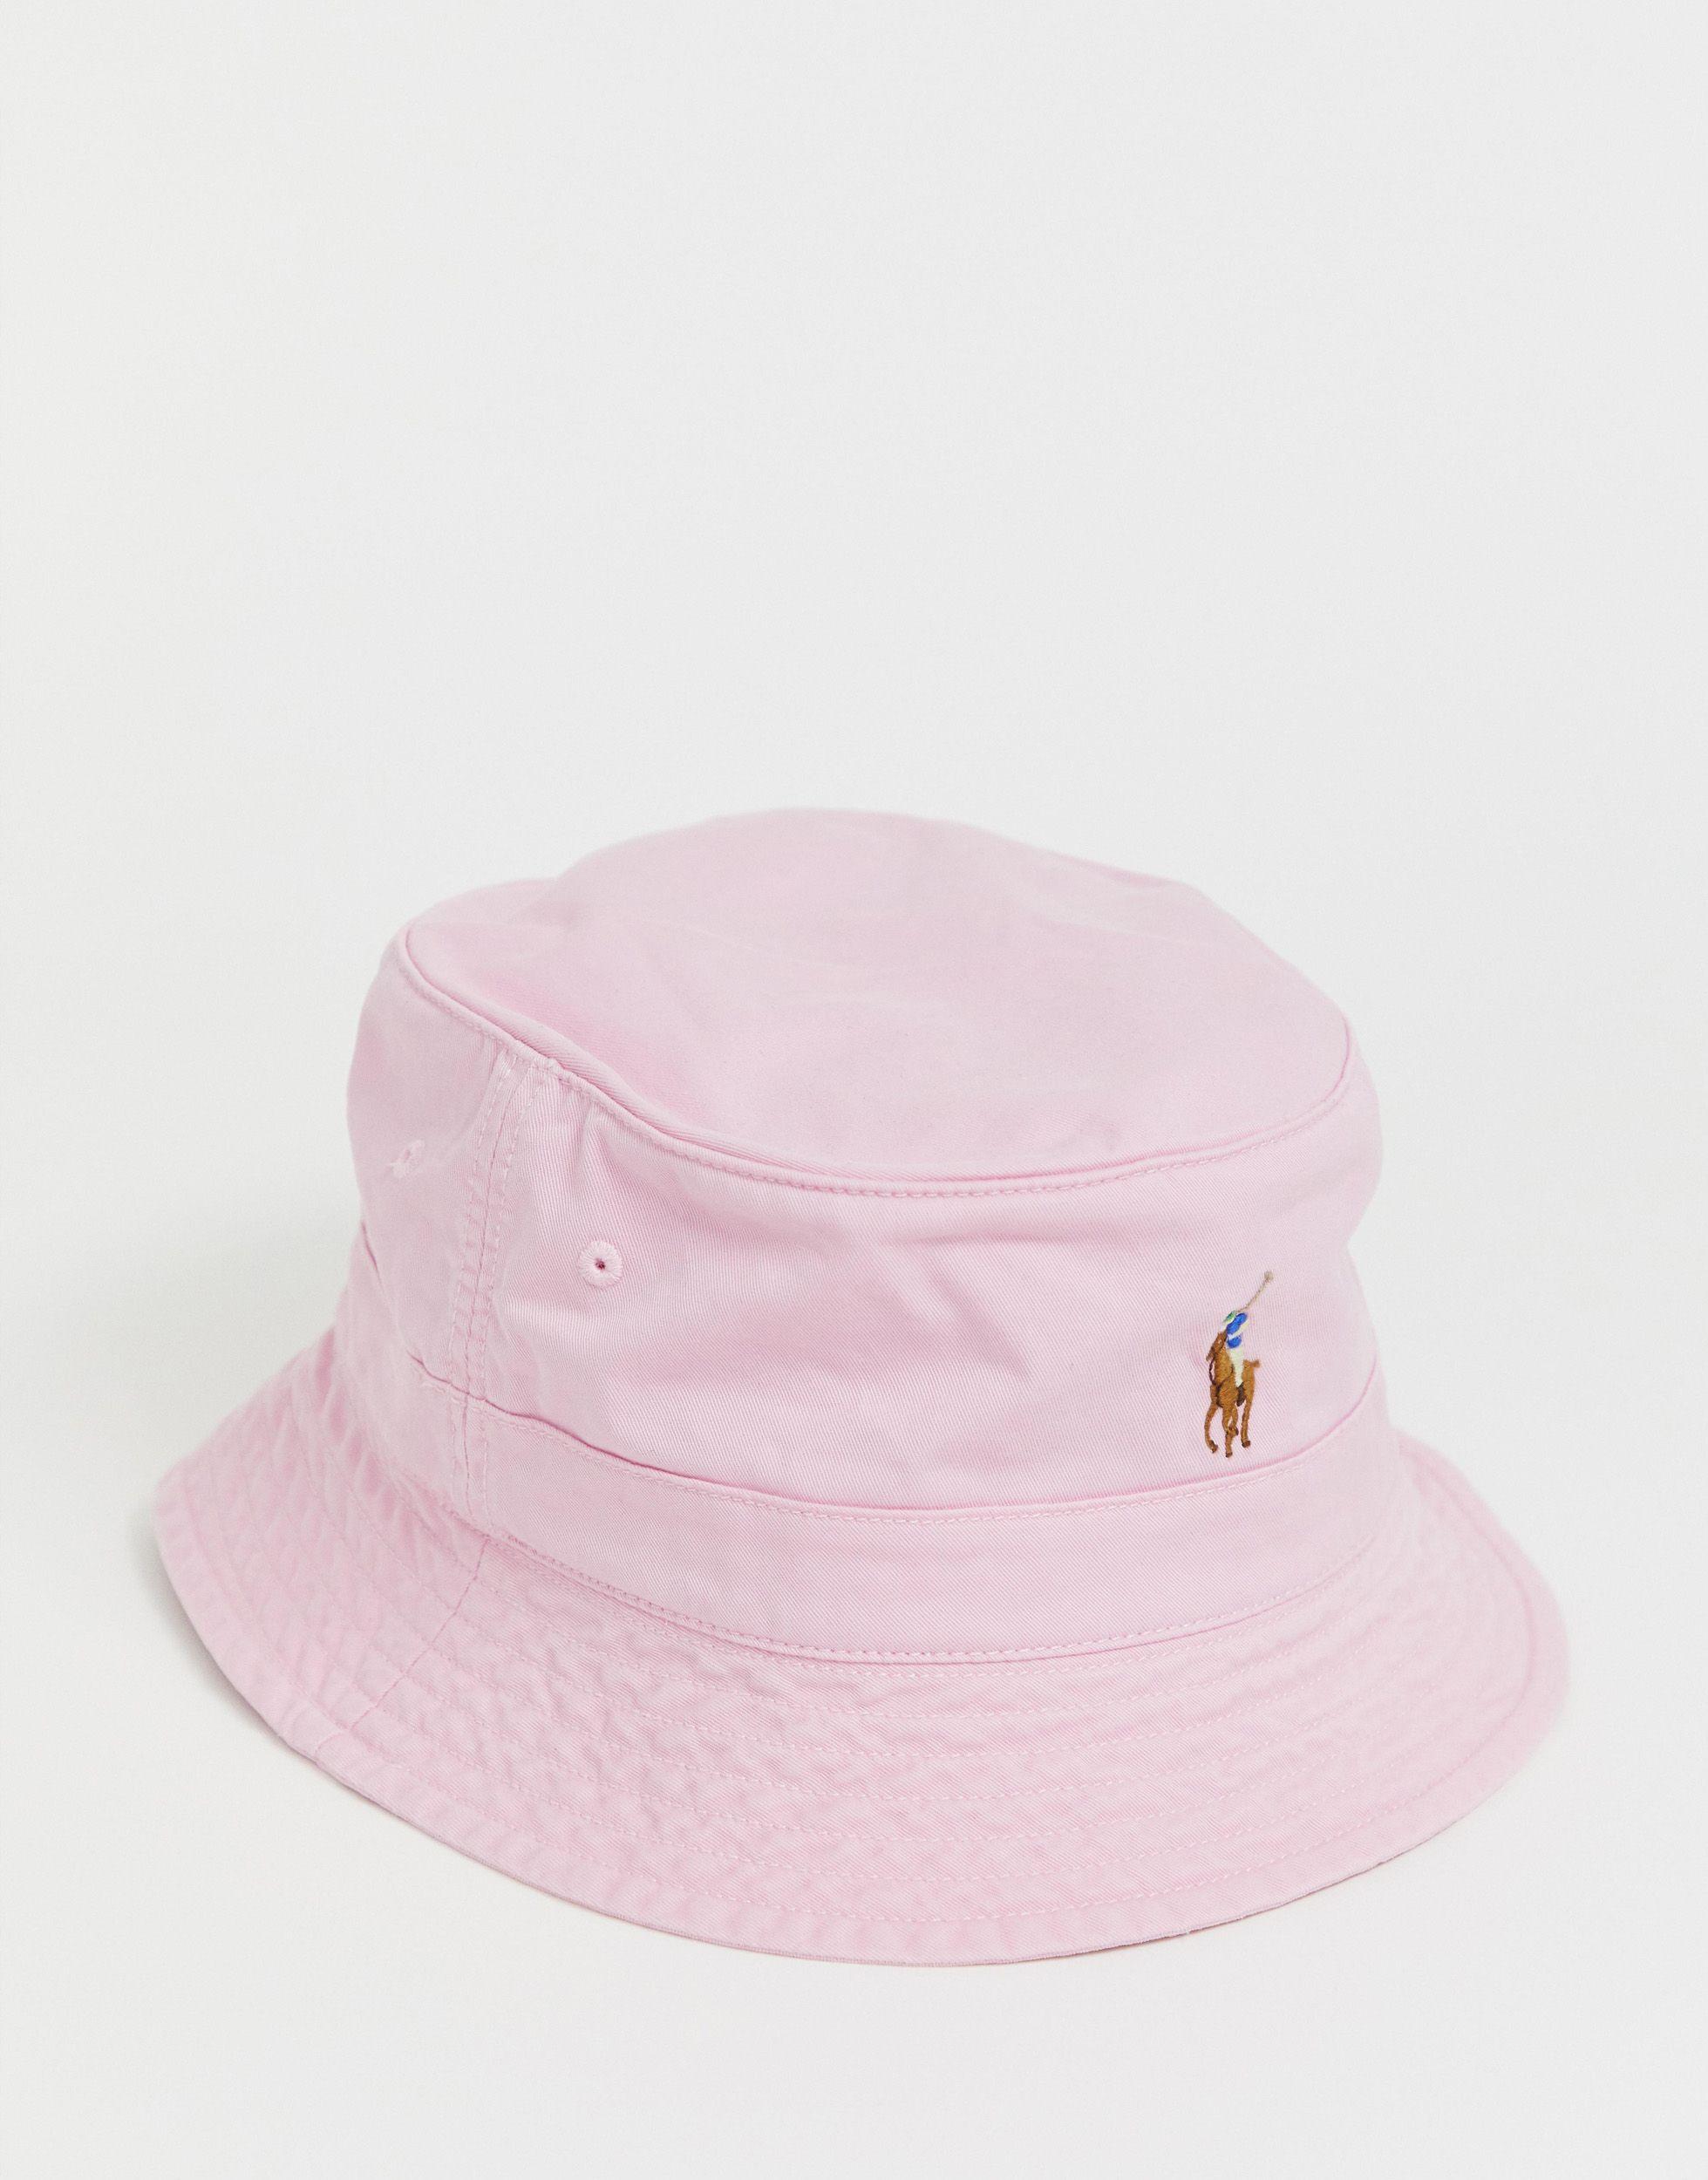 polo sun hat